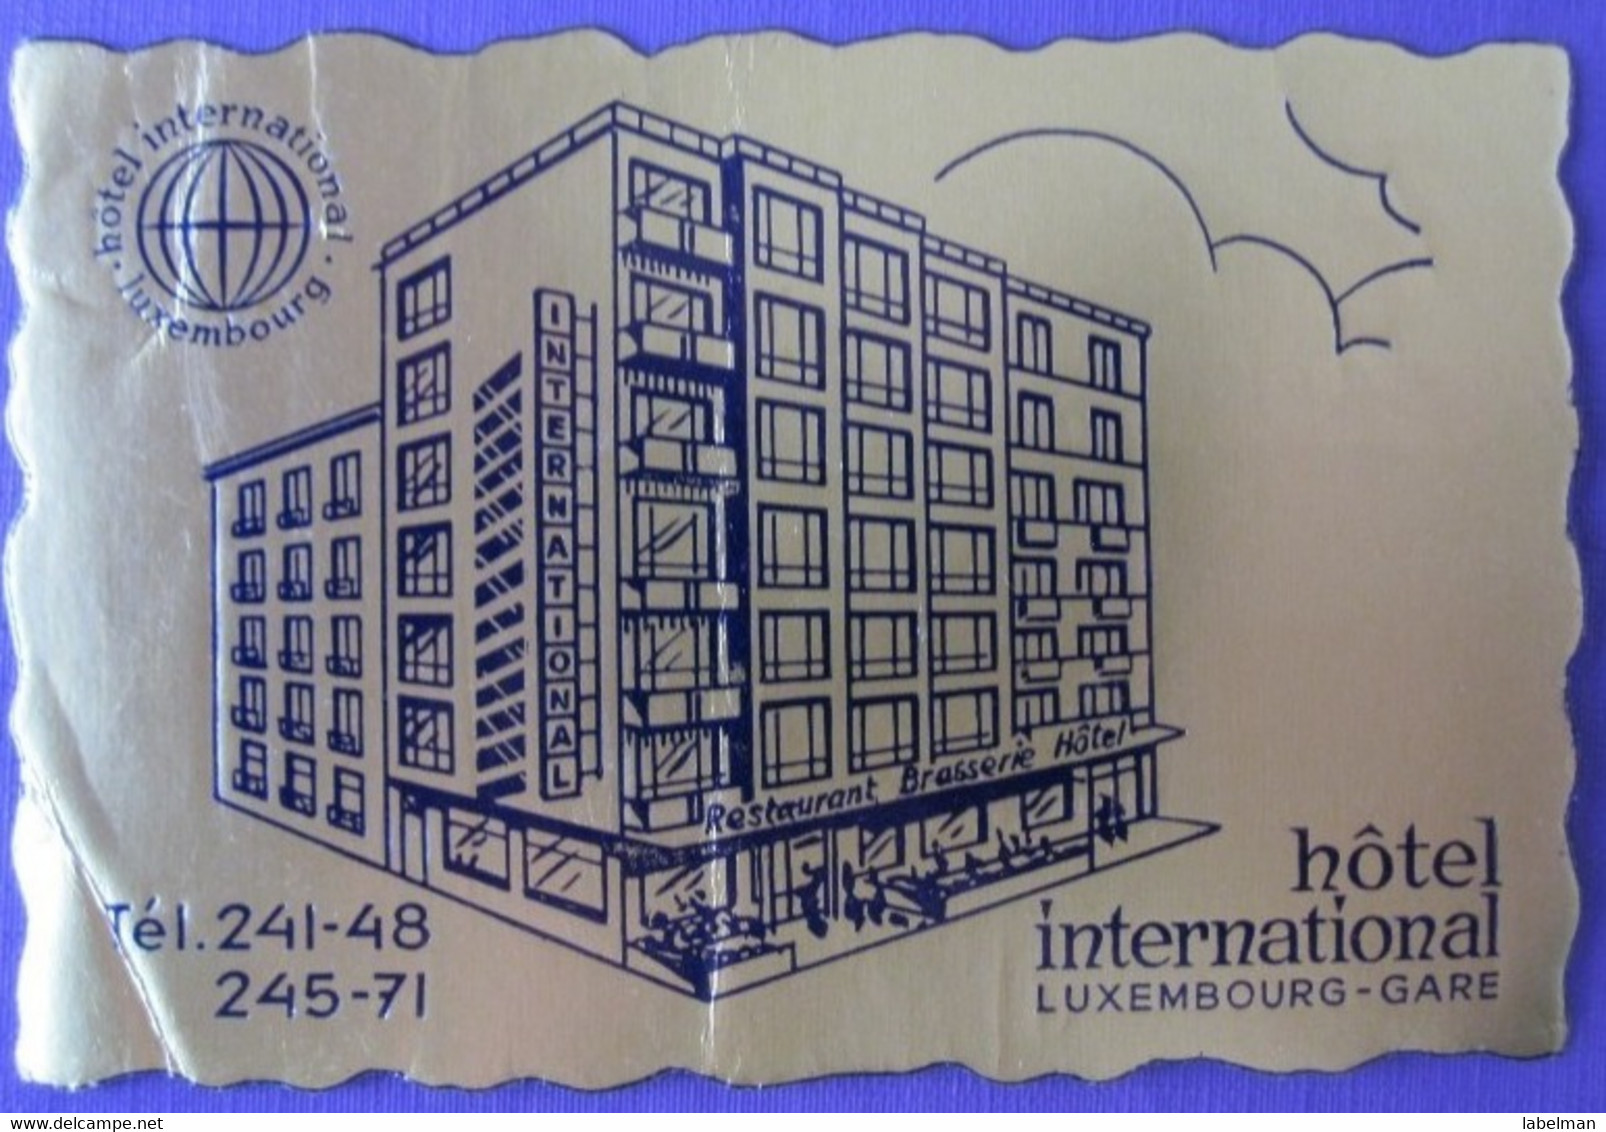 HOTEL AUBERGE MOTEL INTERNATIONAL GARE LUXEMBOURG BELGIUM FRANCE DECAL STICKER LUGGAGE LABEL ETIQUETTE AUFKLEBER - Hotel Labels